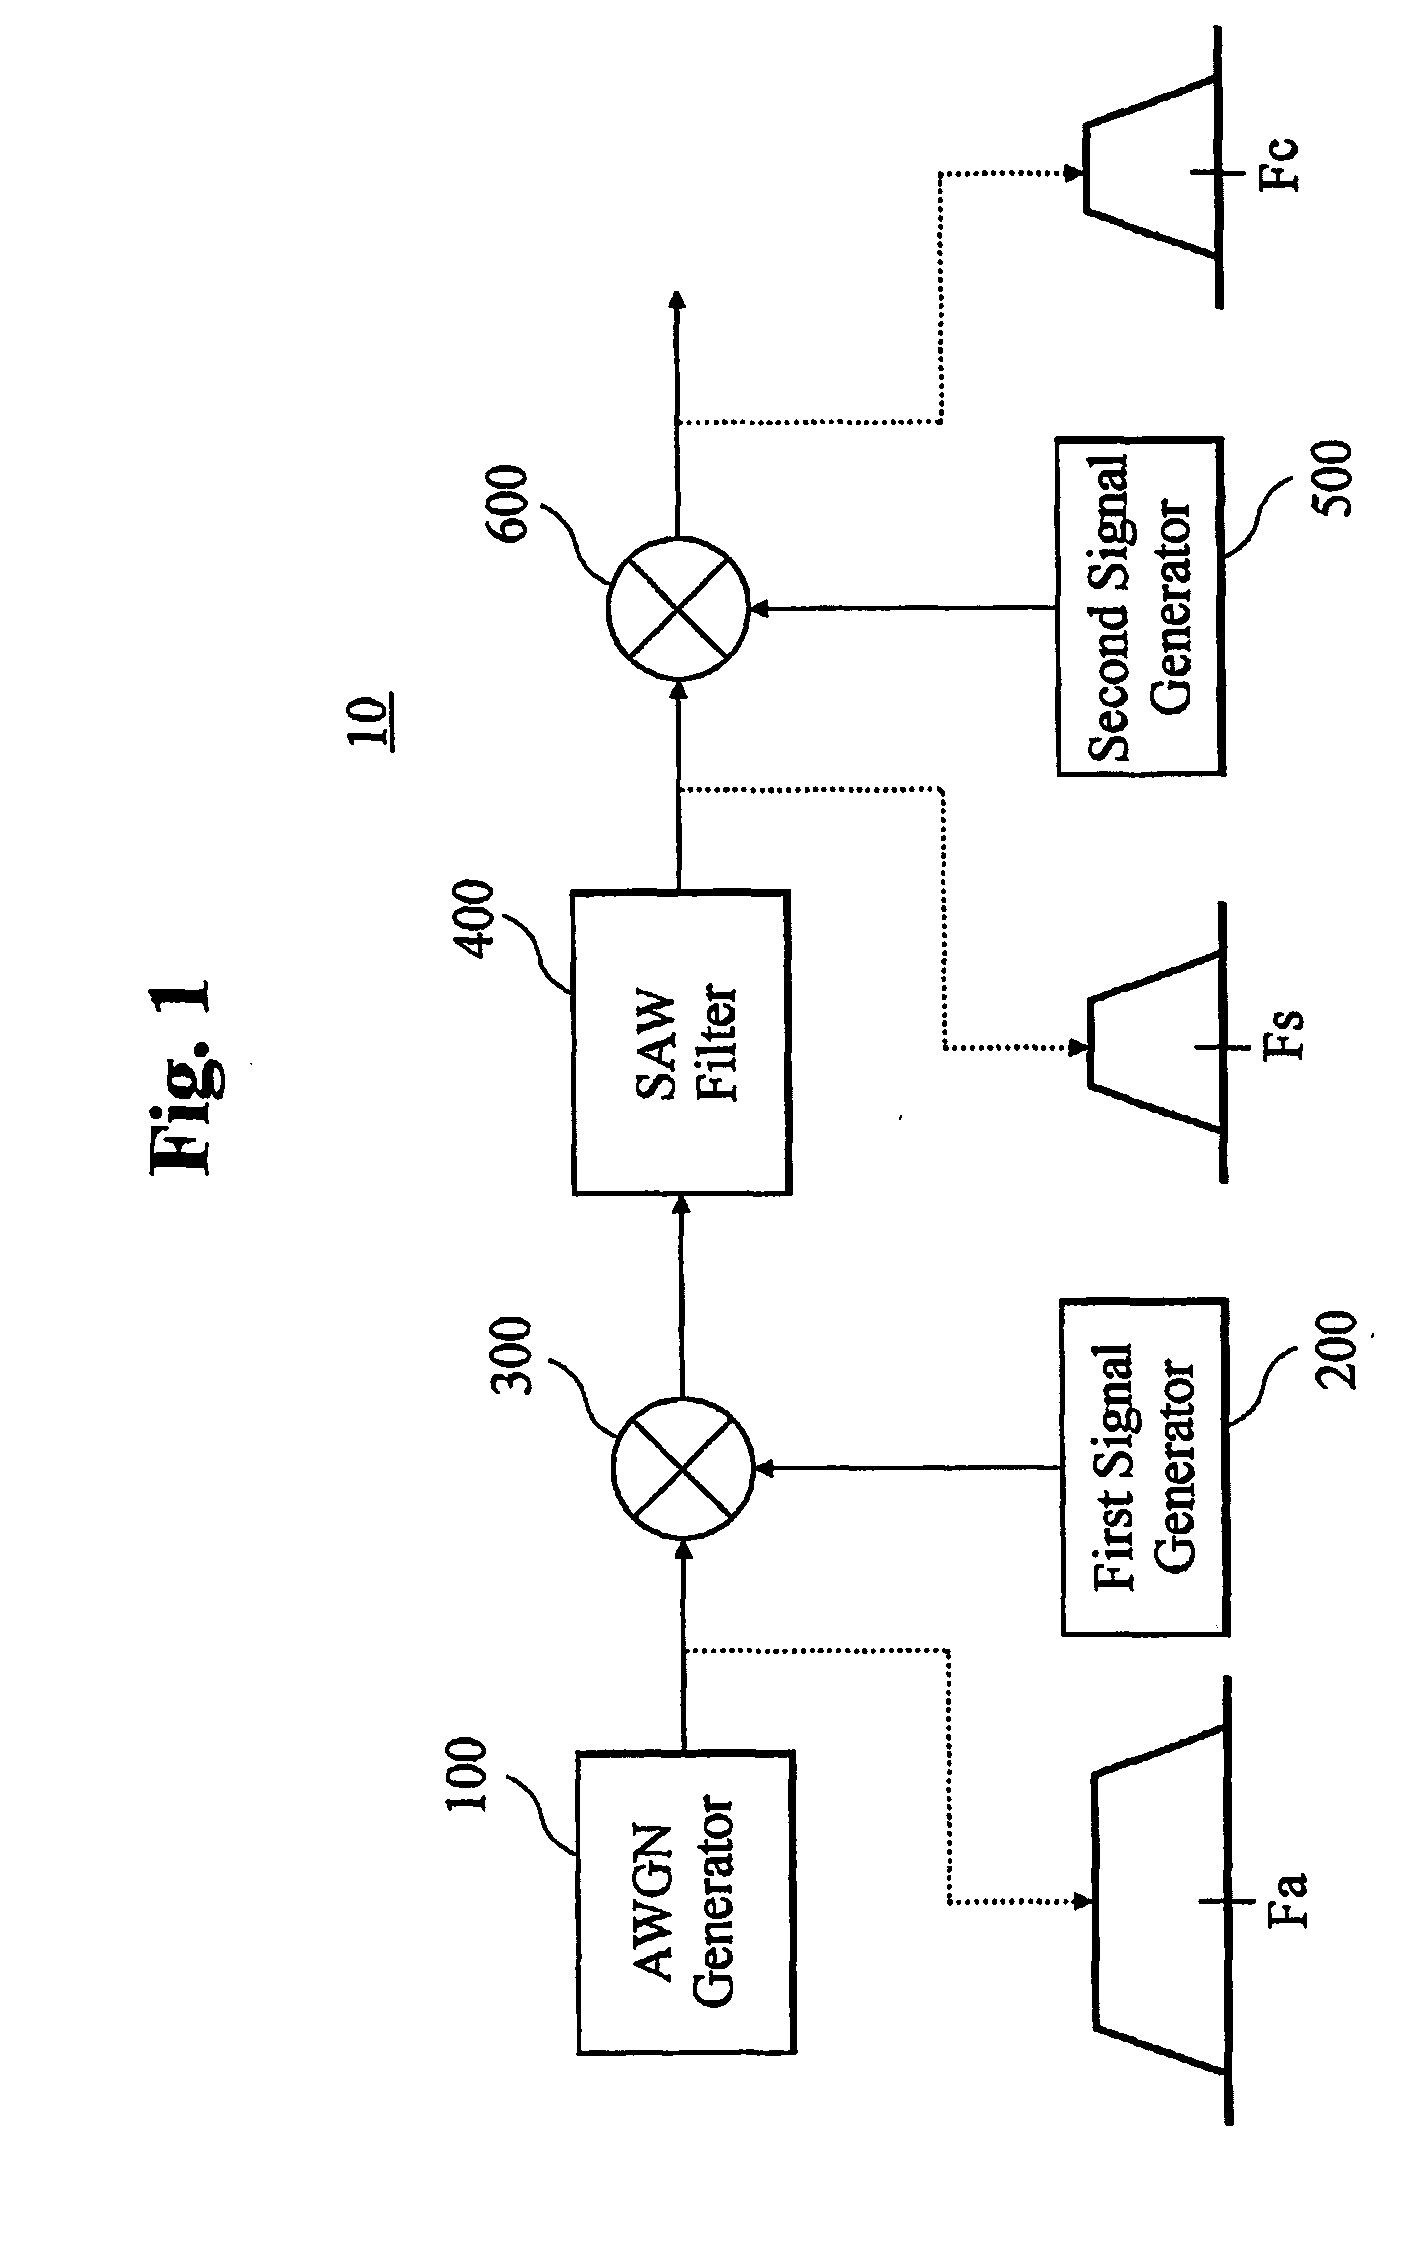 Cdma signal generator using an awgn generator and a saw filter